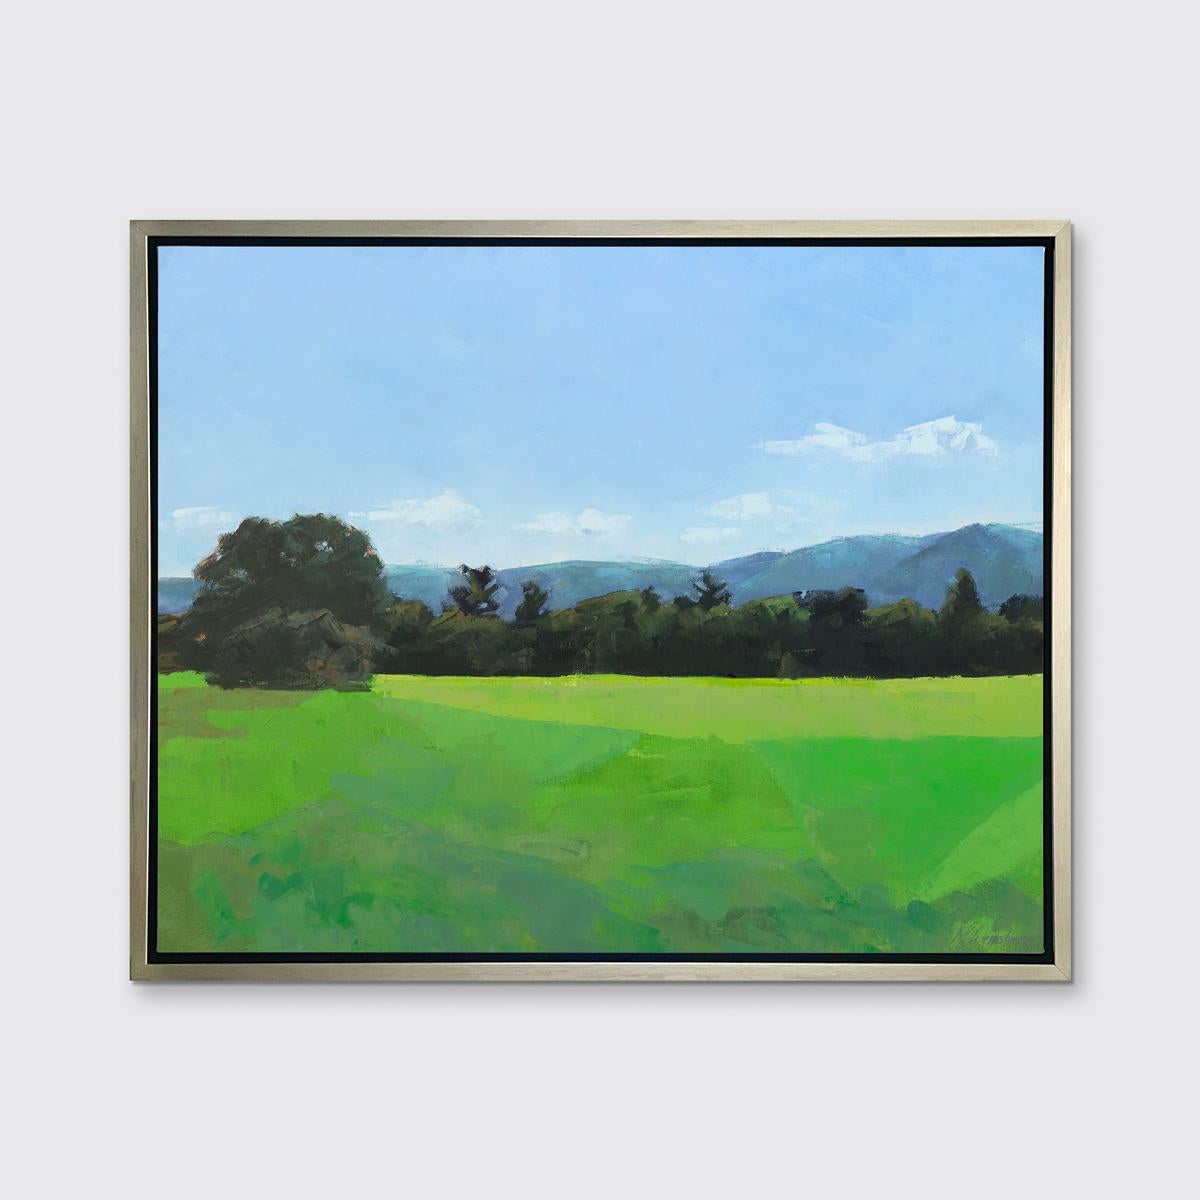 Molly Doe Wensberg Landscape Print - "Clarity" Framed Limited Edition Print, 24" x 30"